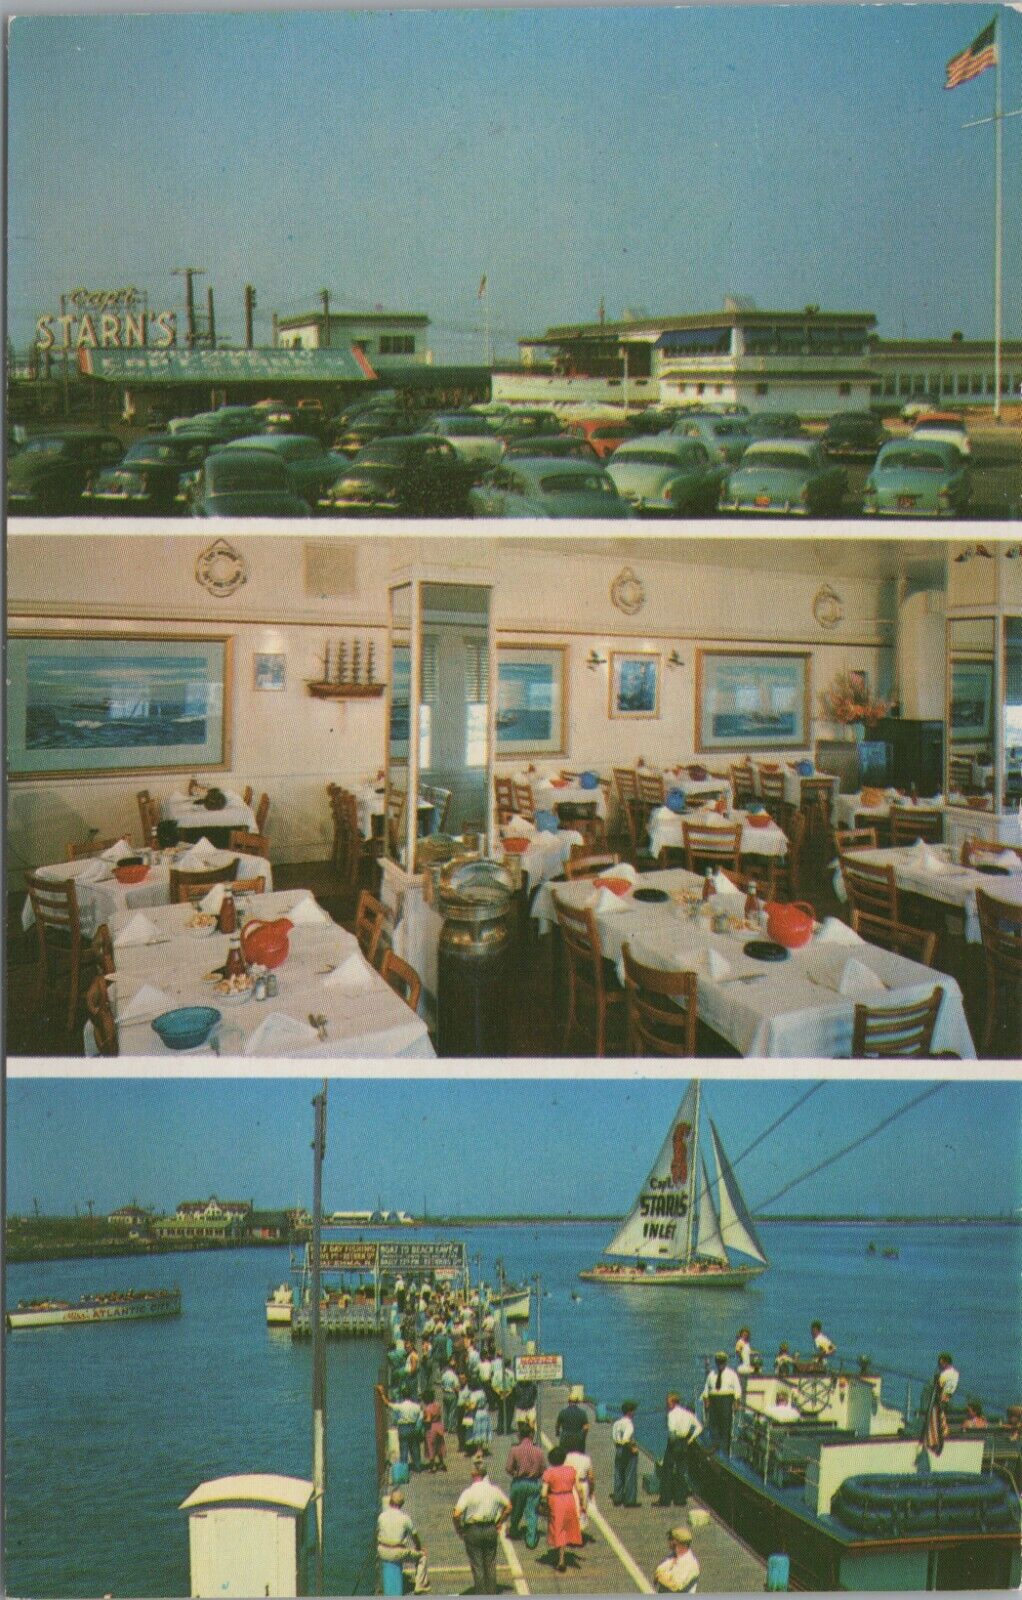 Captain Starn's Restaurant Boating Center Atlantic City NJ 3 views c1950s E692